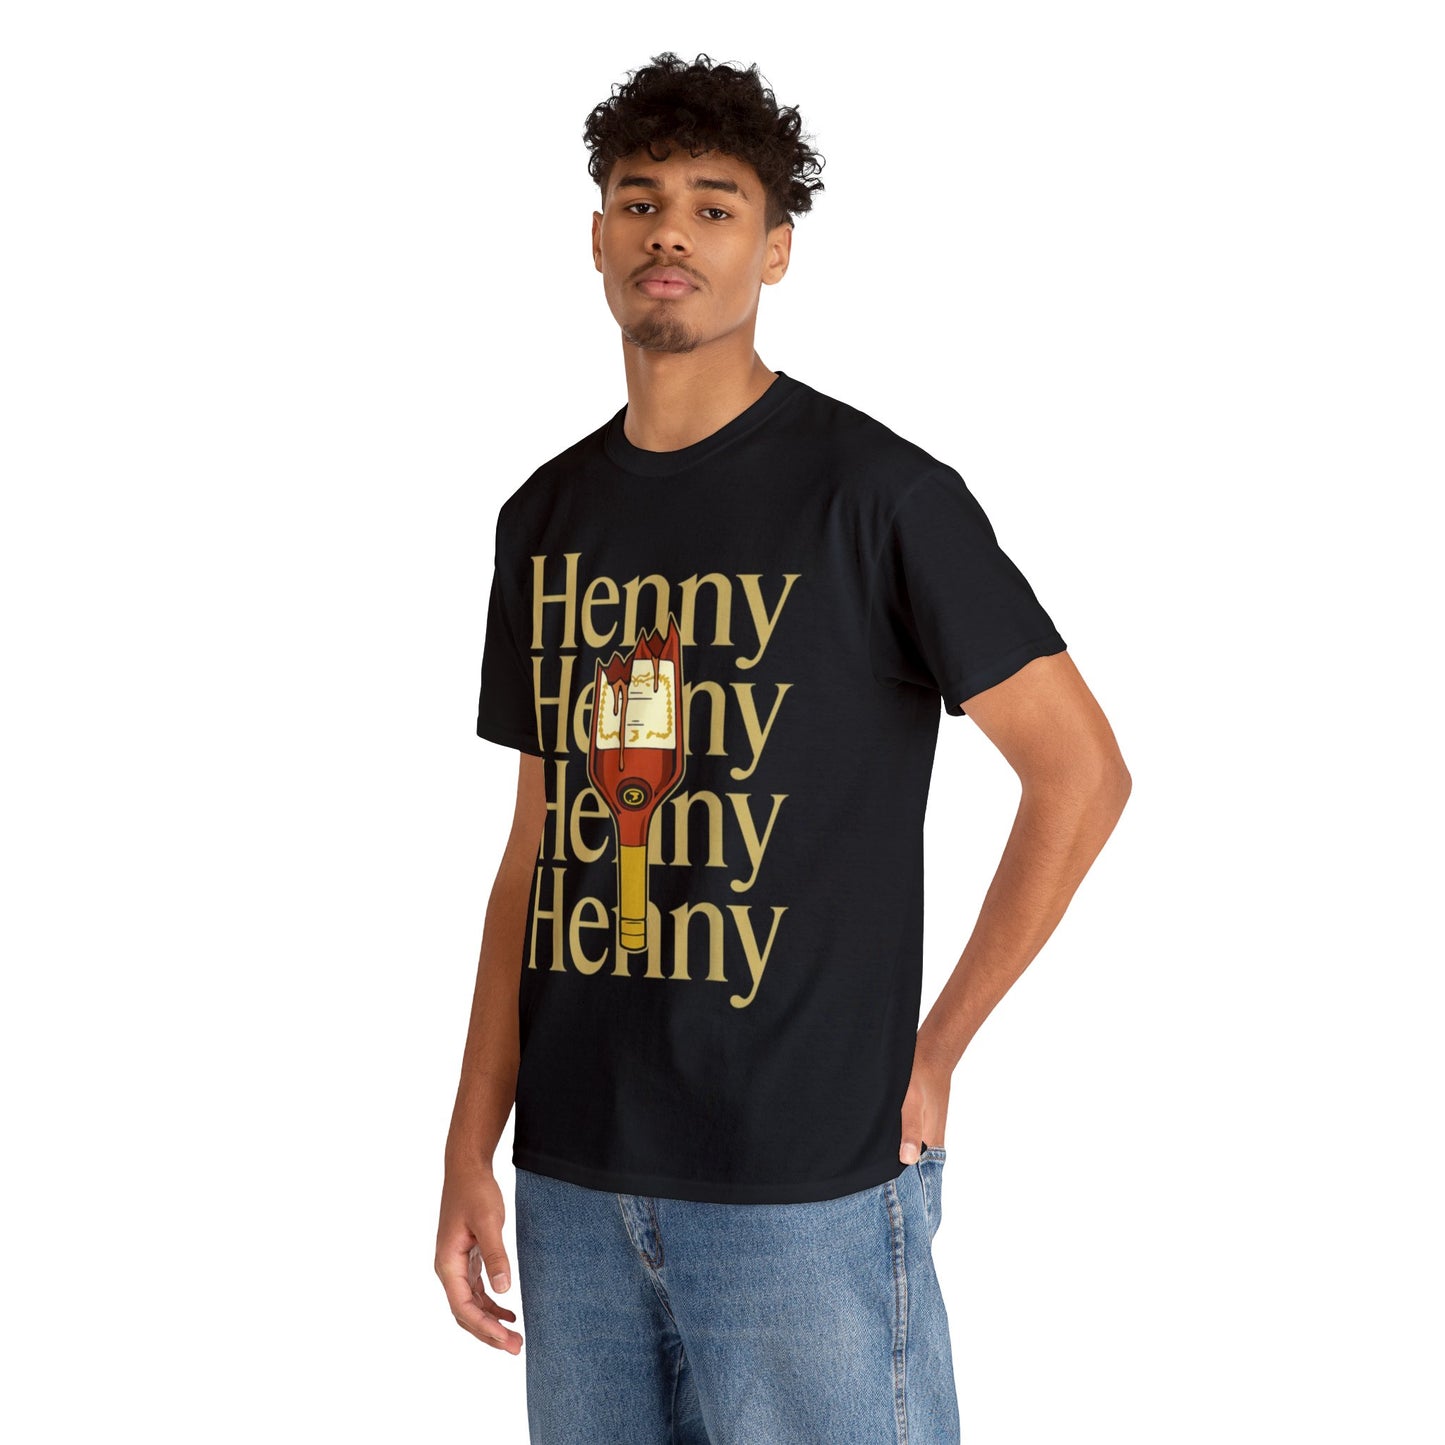 Henny Tee